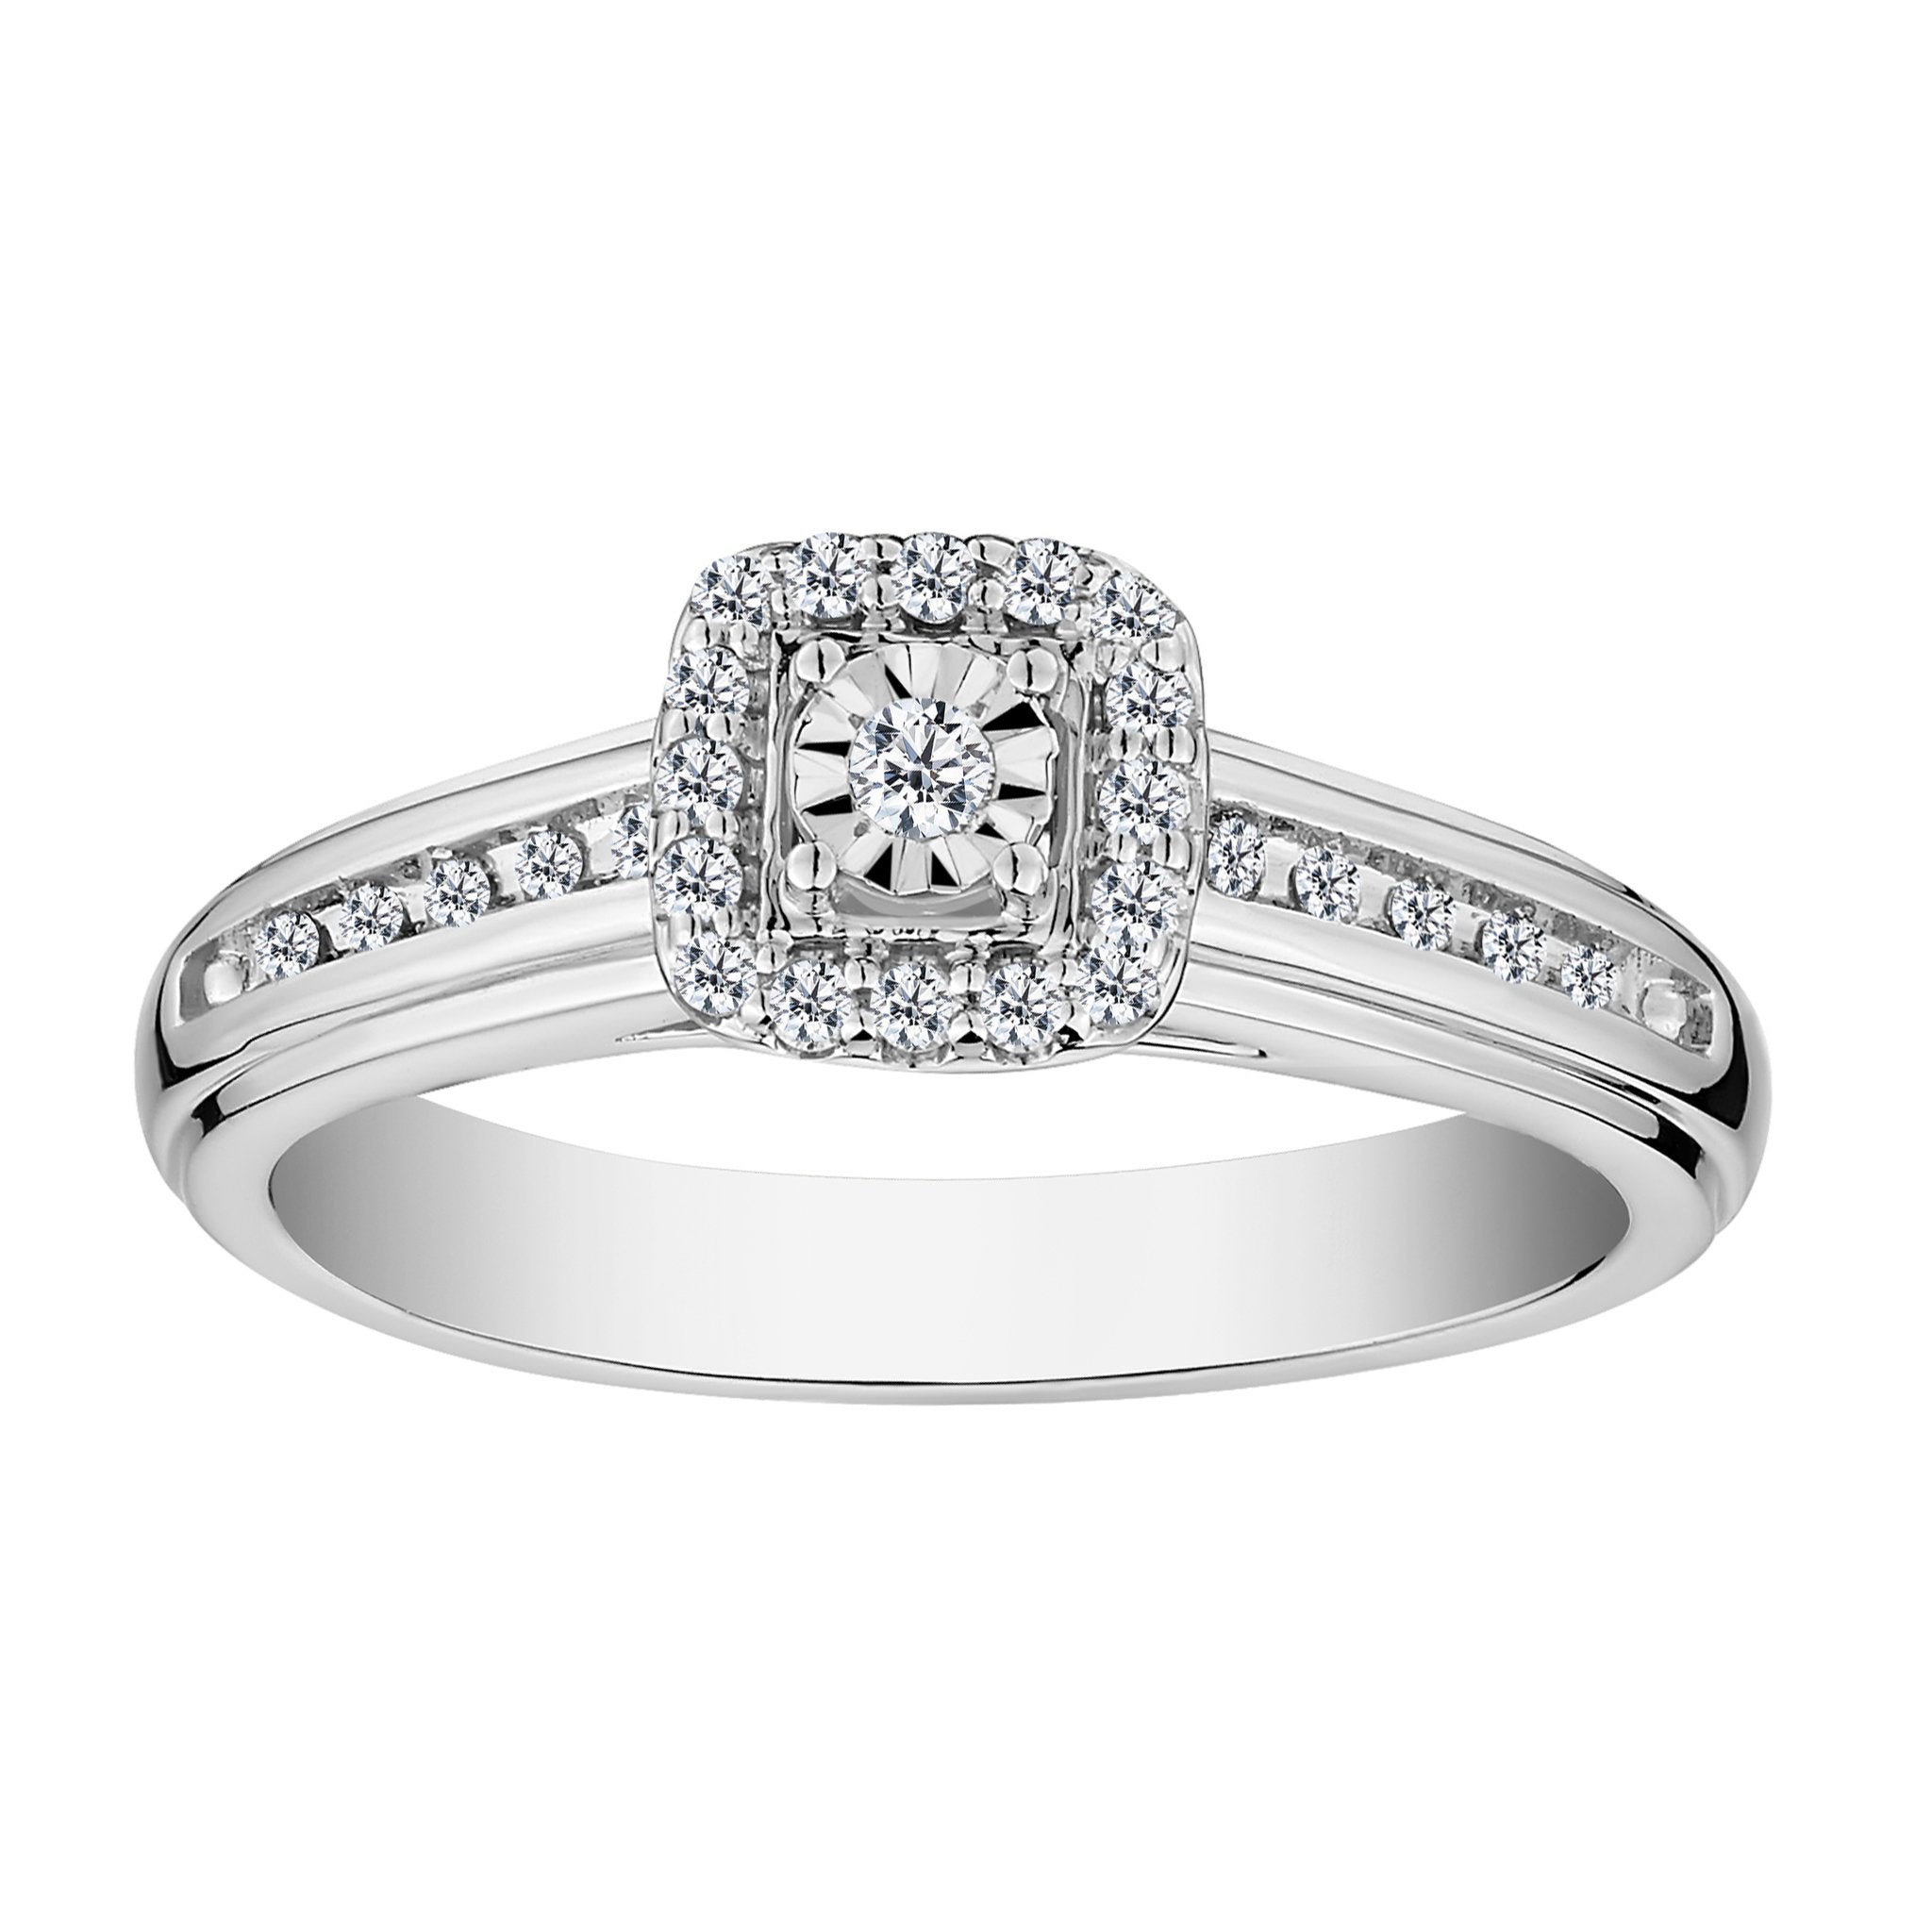 .17 Carat Diamond Ring, 10kt White Gold - Griffin Jewellery Designs